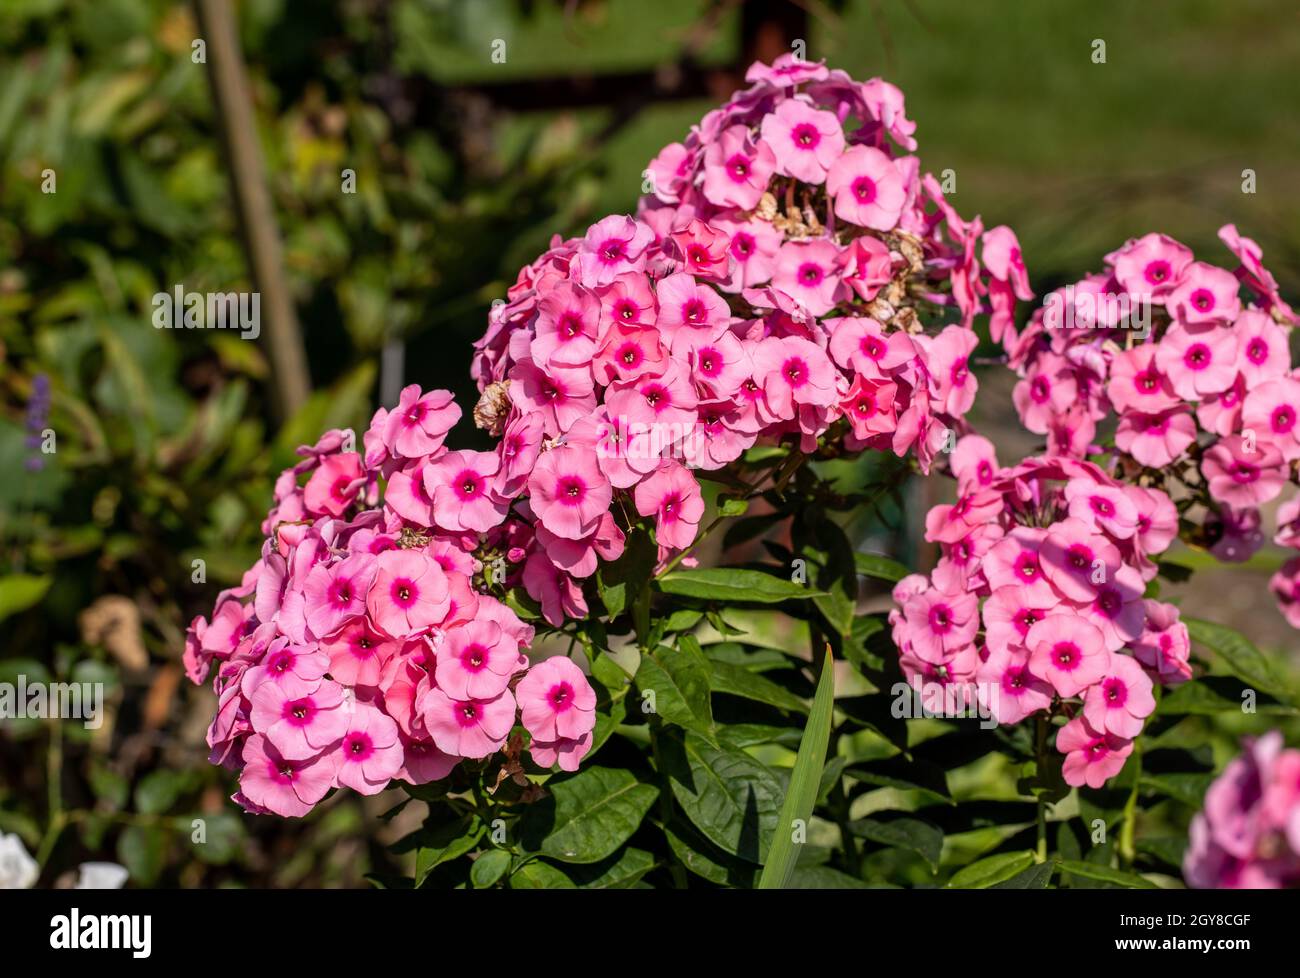 Flowering branch of pink phlox in the garden Stock Photo